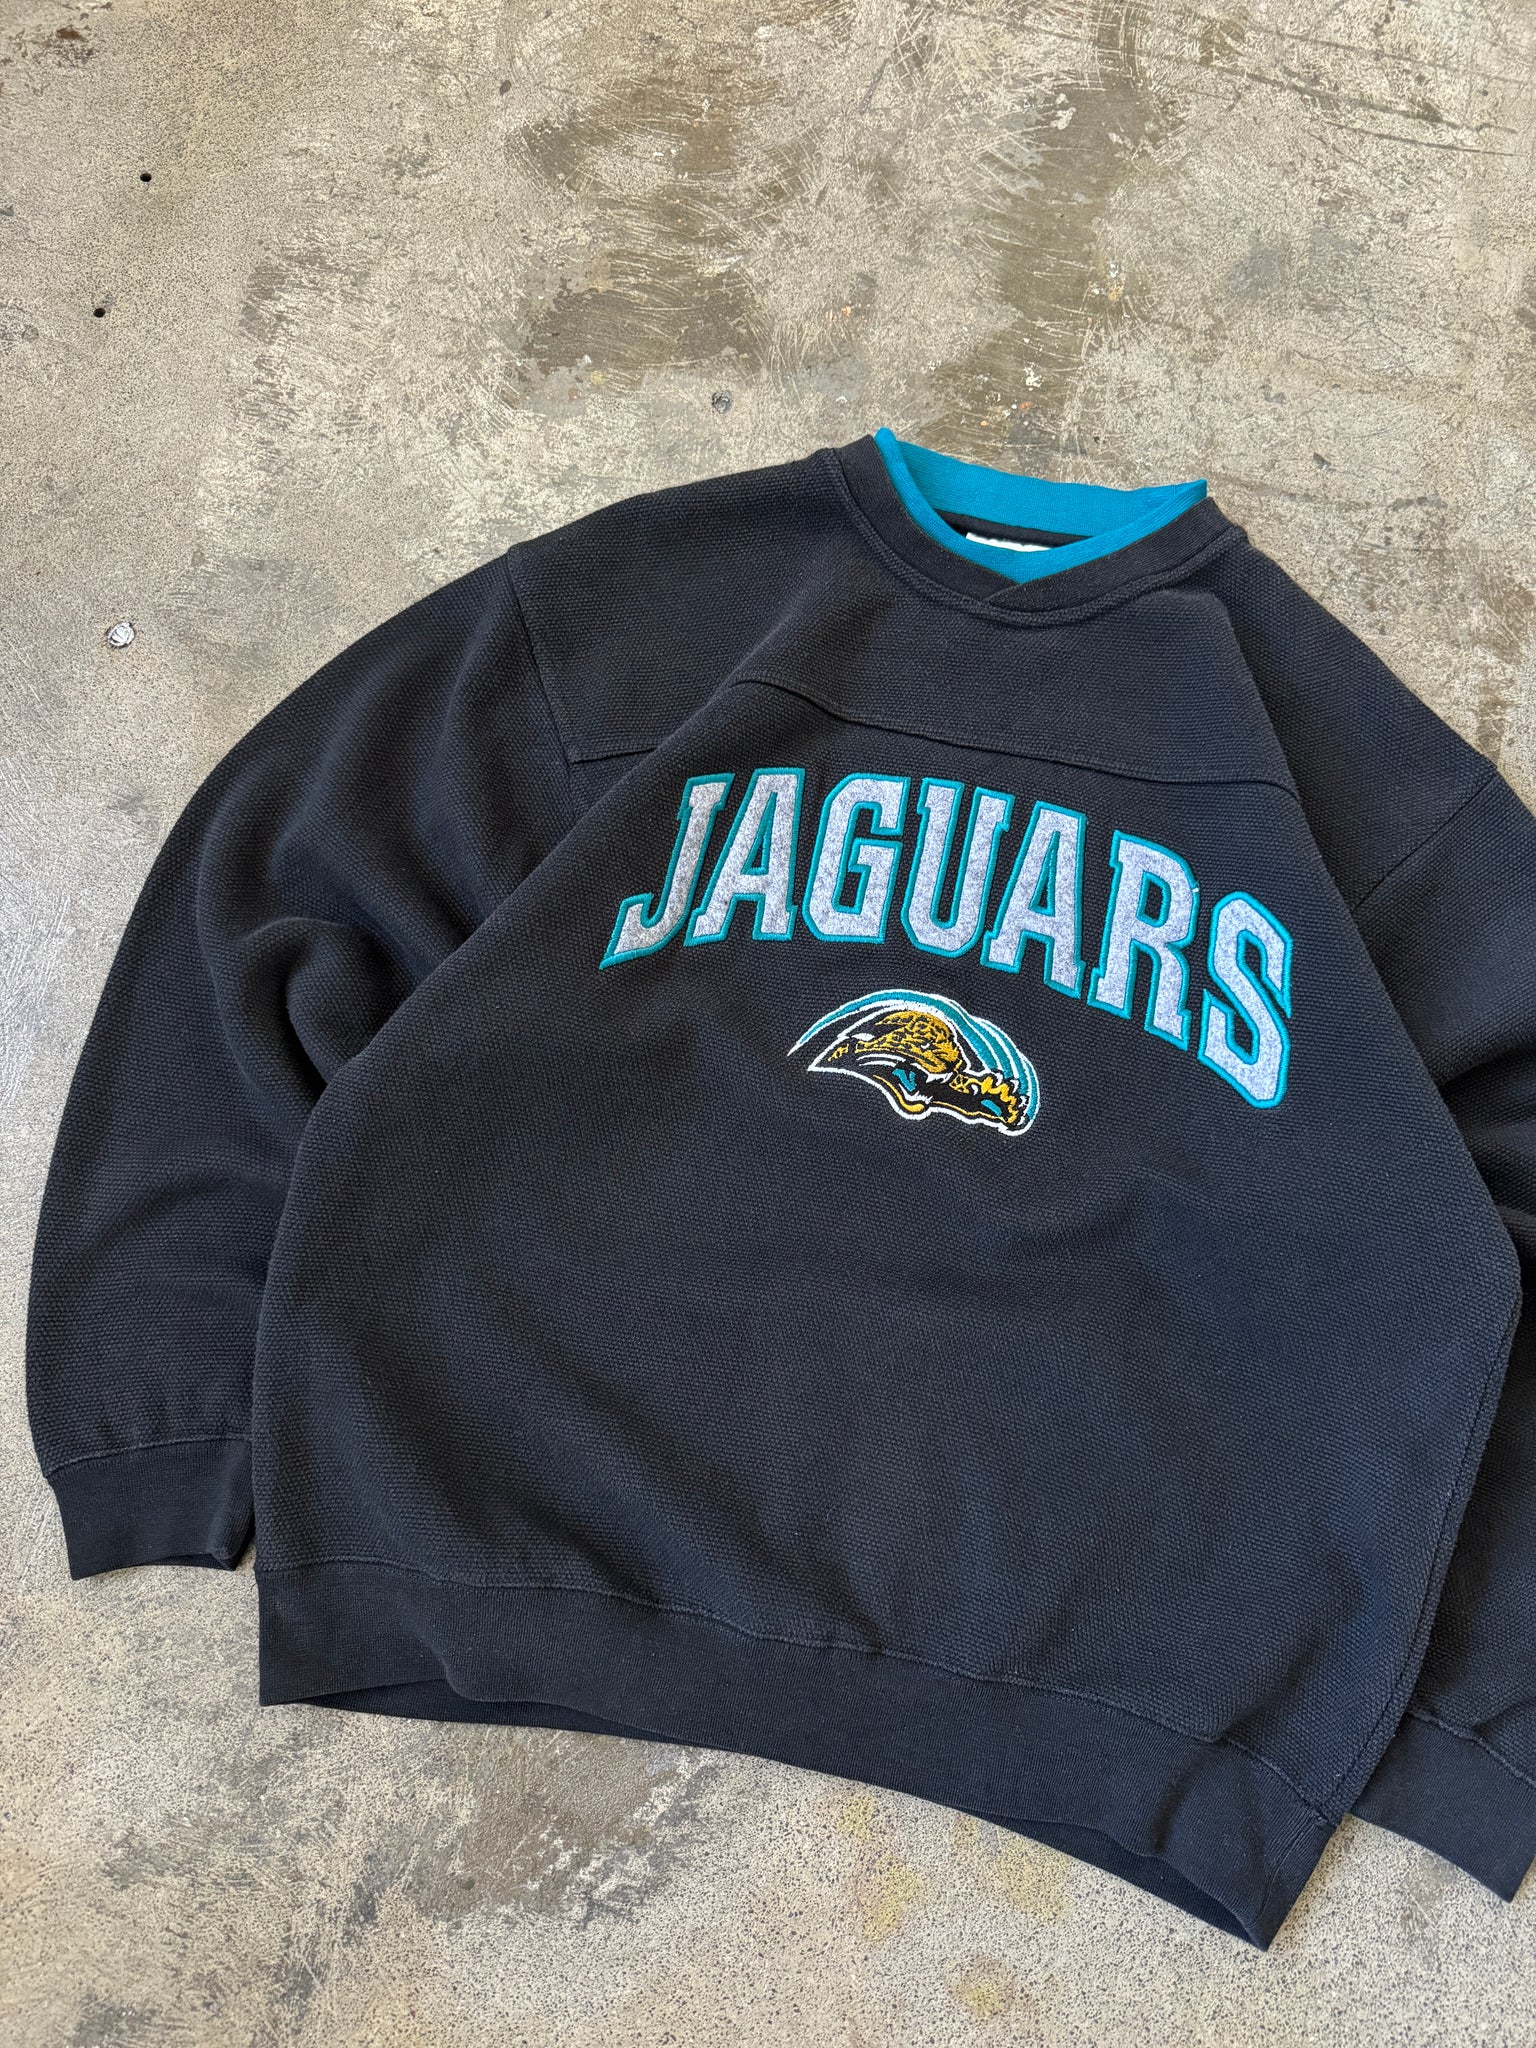 Vintage Lee Sport Jaguars Sweatshirt (L)